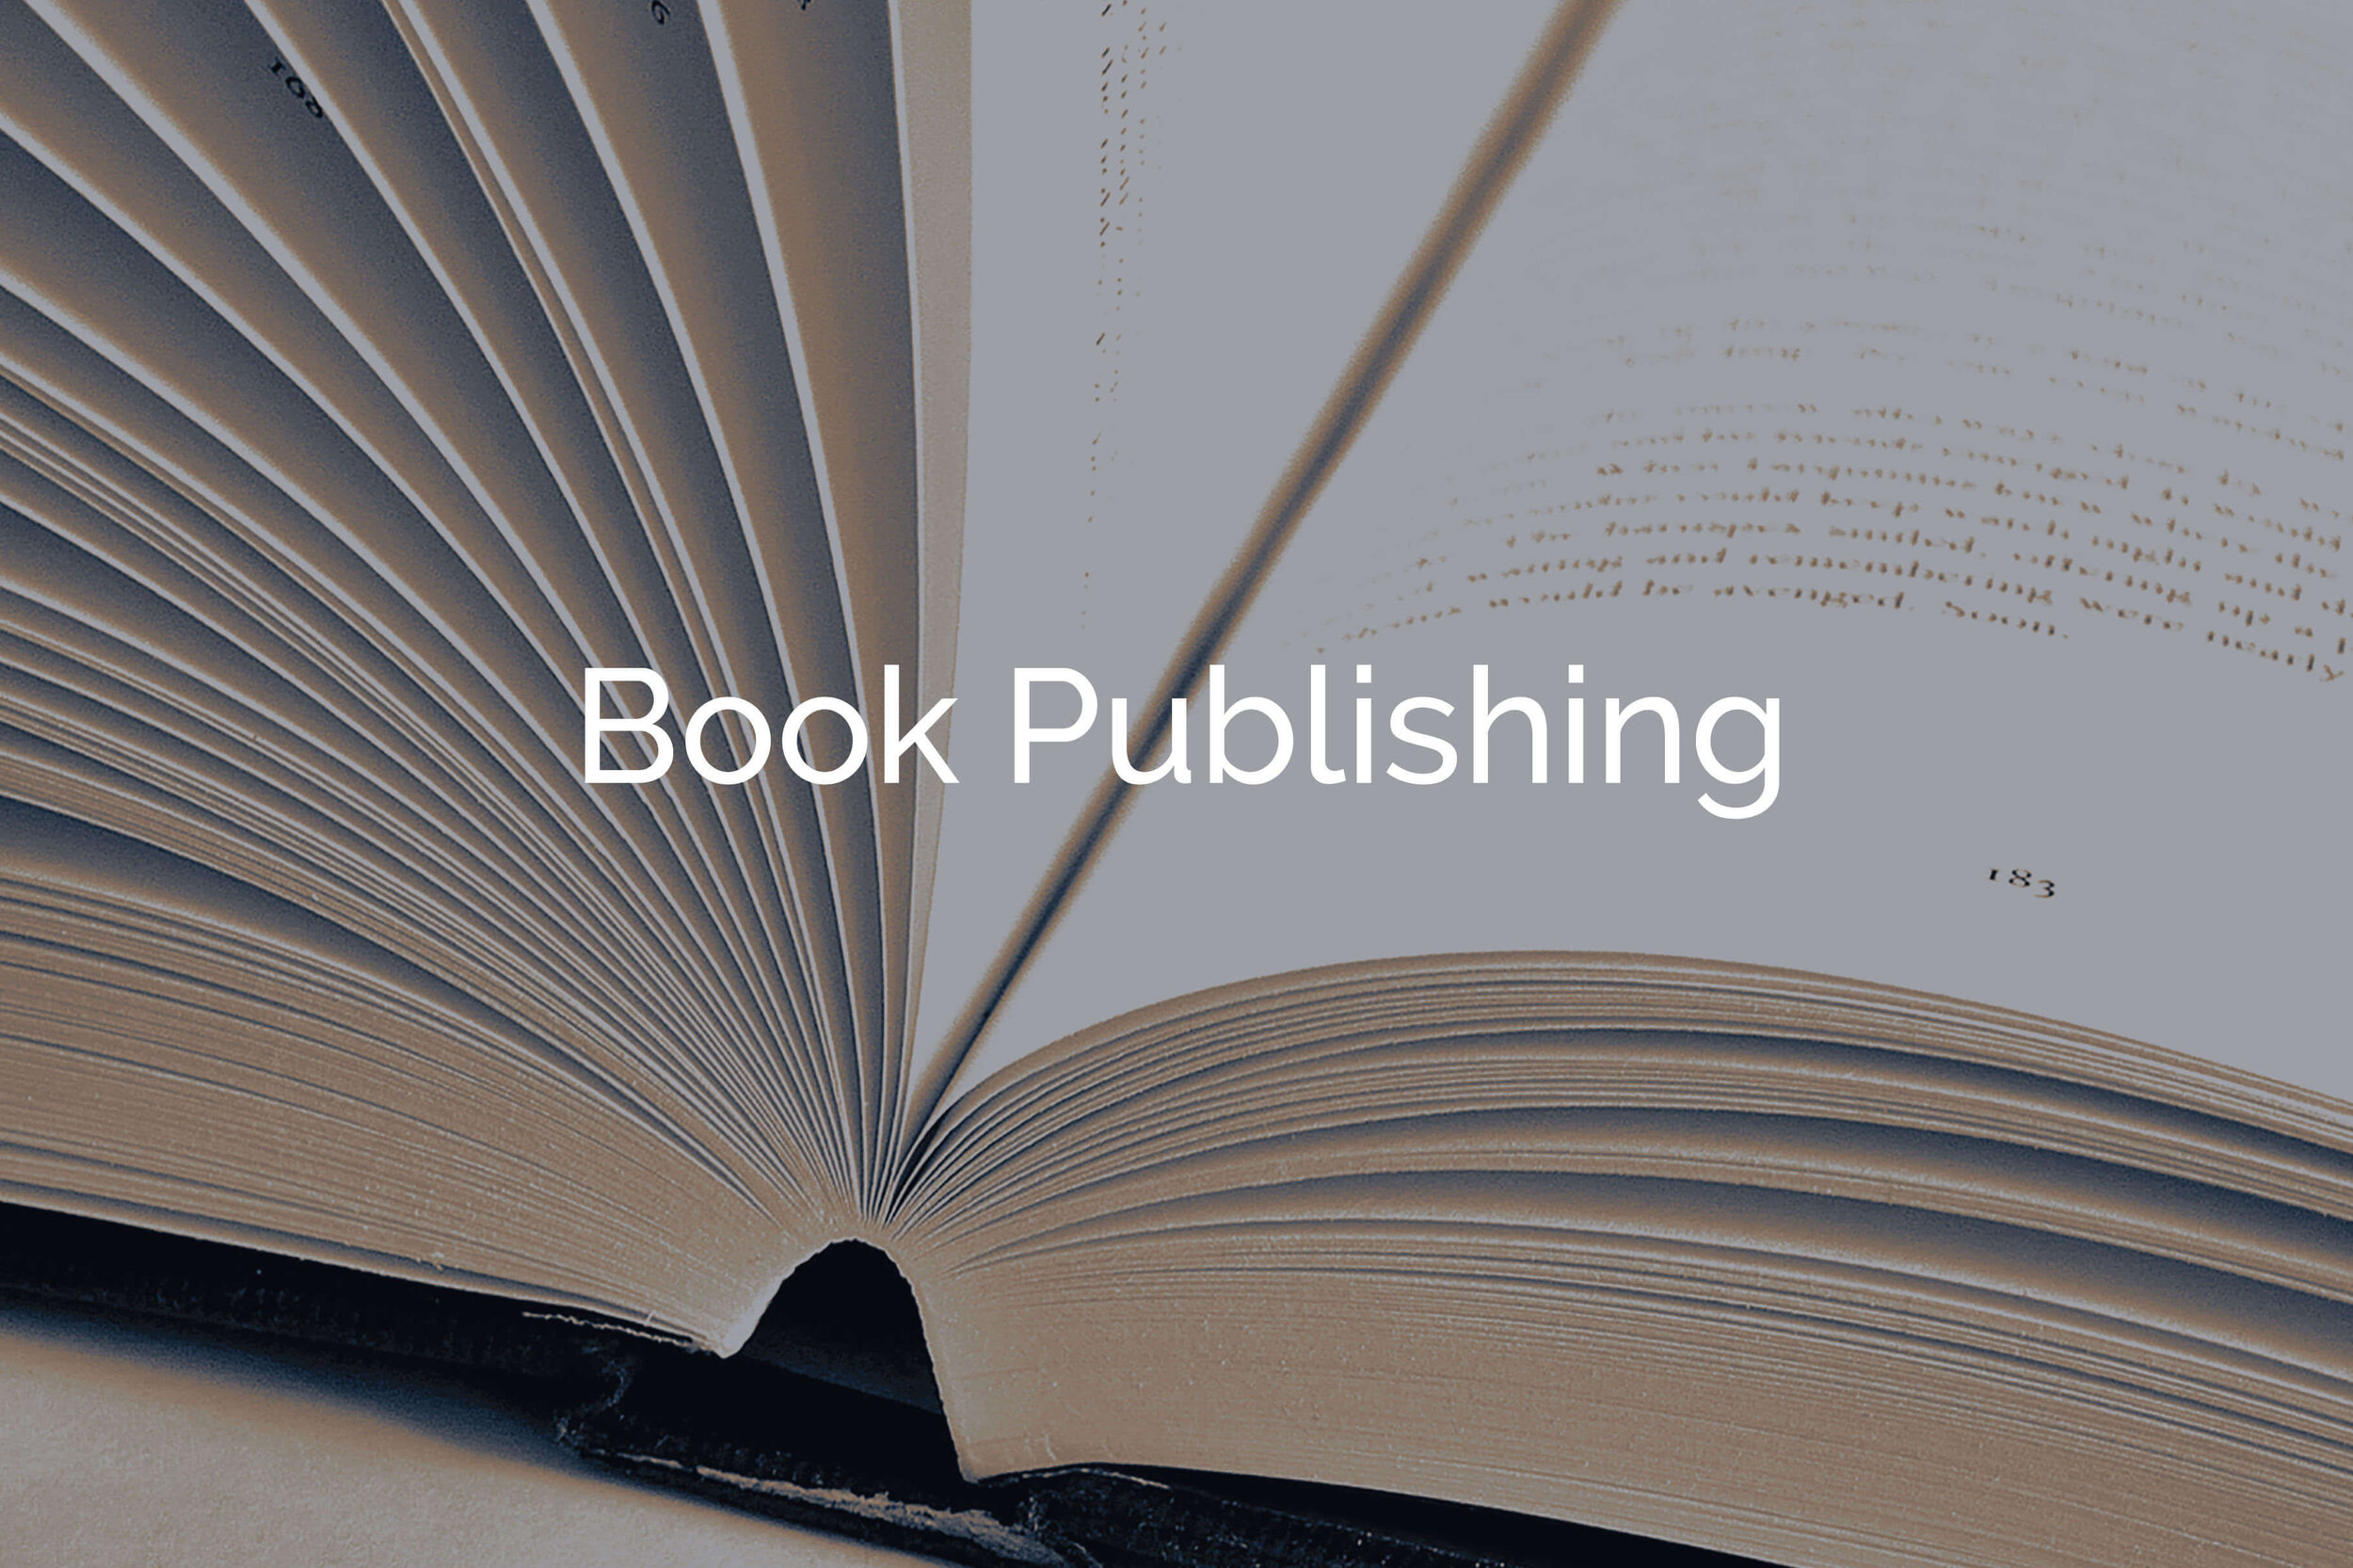 Book publishing